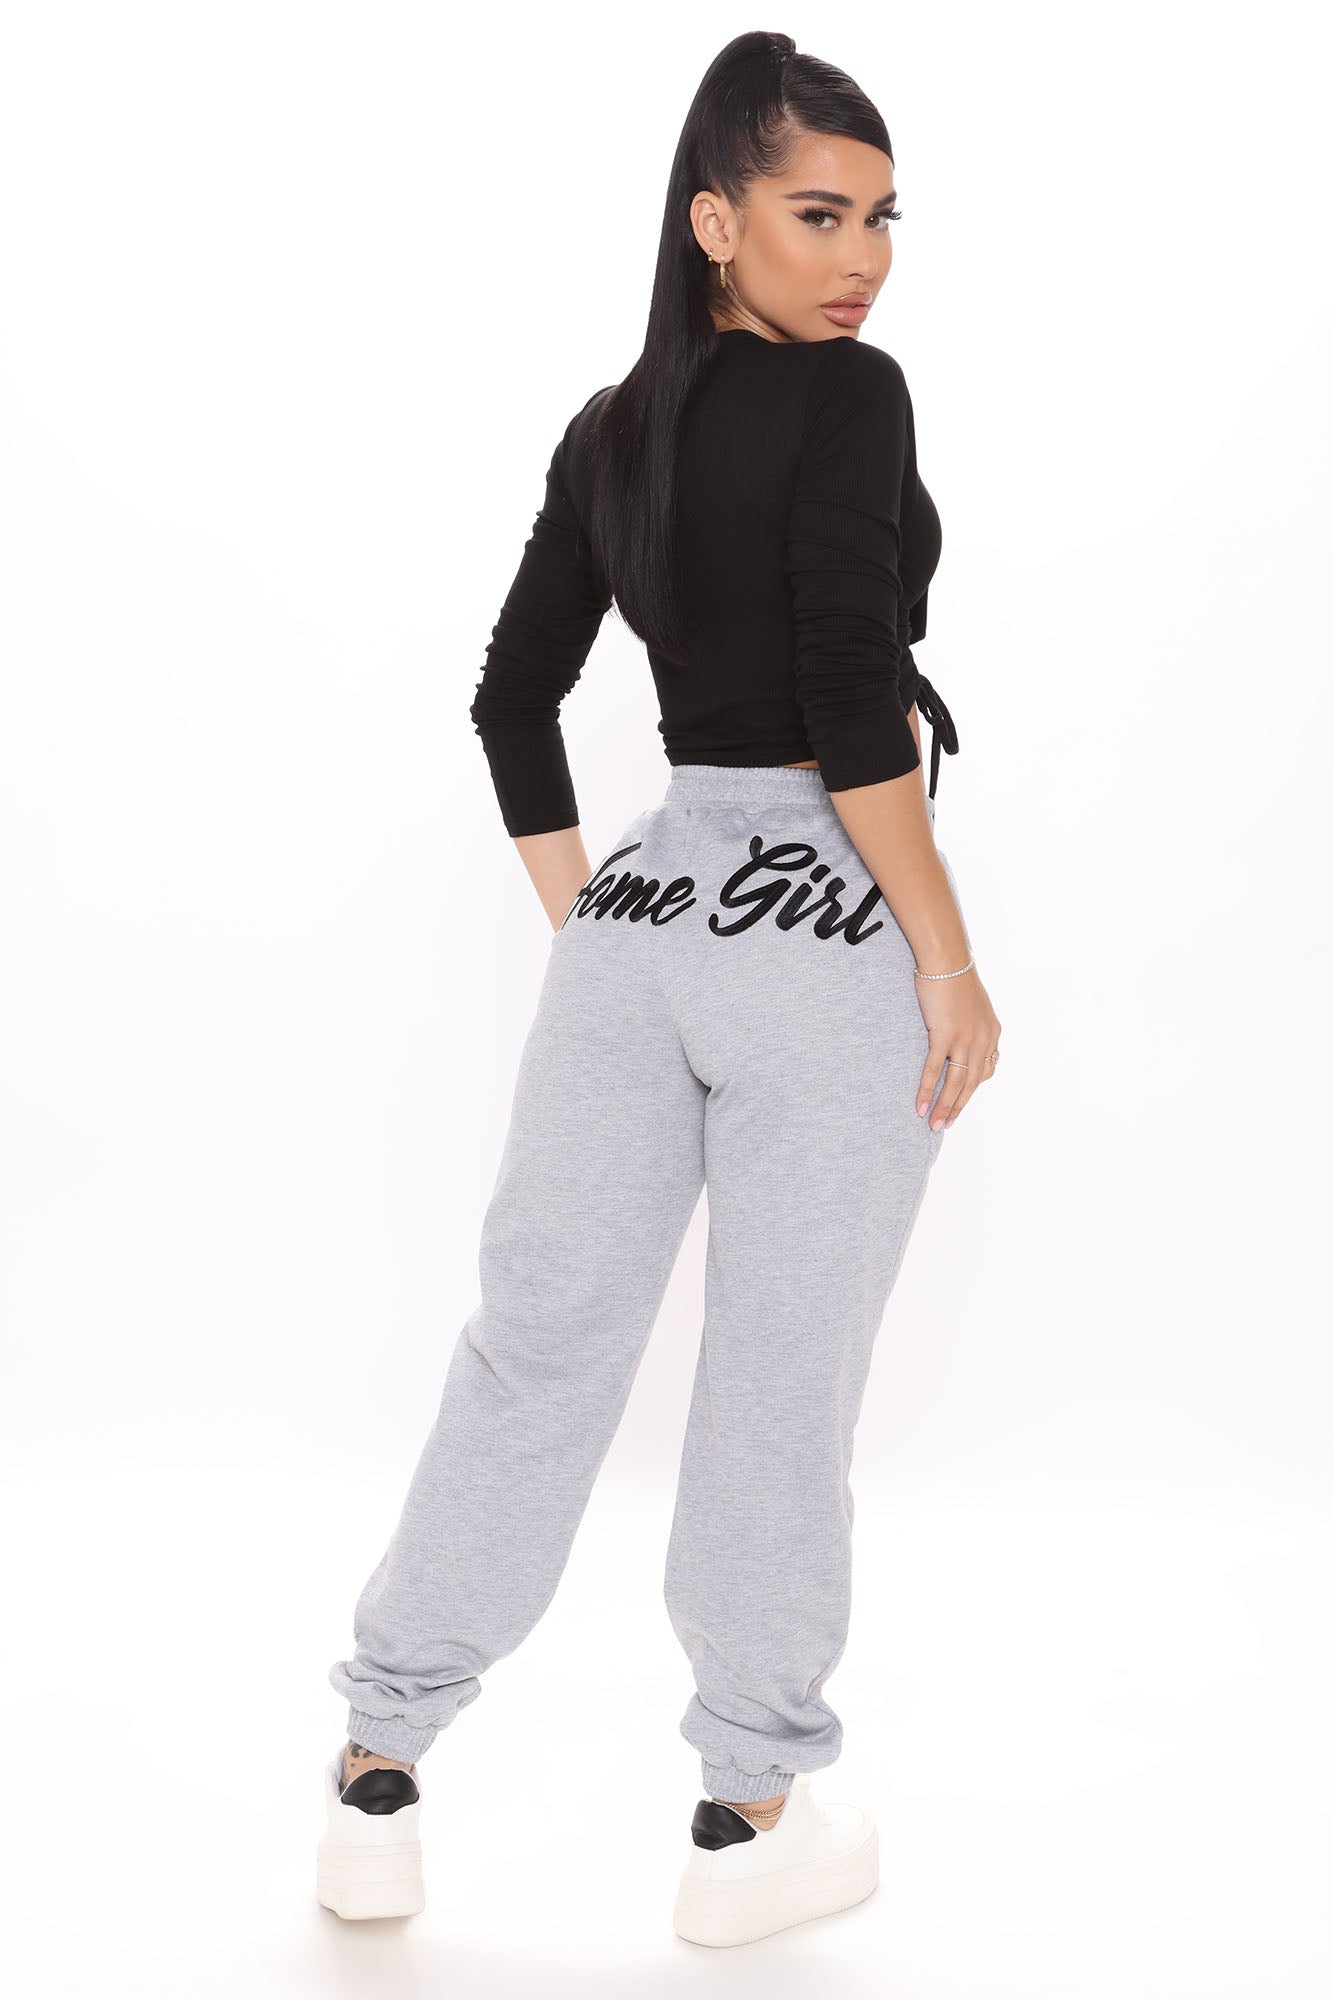 Your Favorite Home Girl Sweatpants - Heather Grey, Fashion Nova, Pants